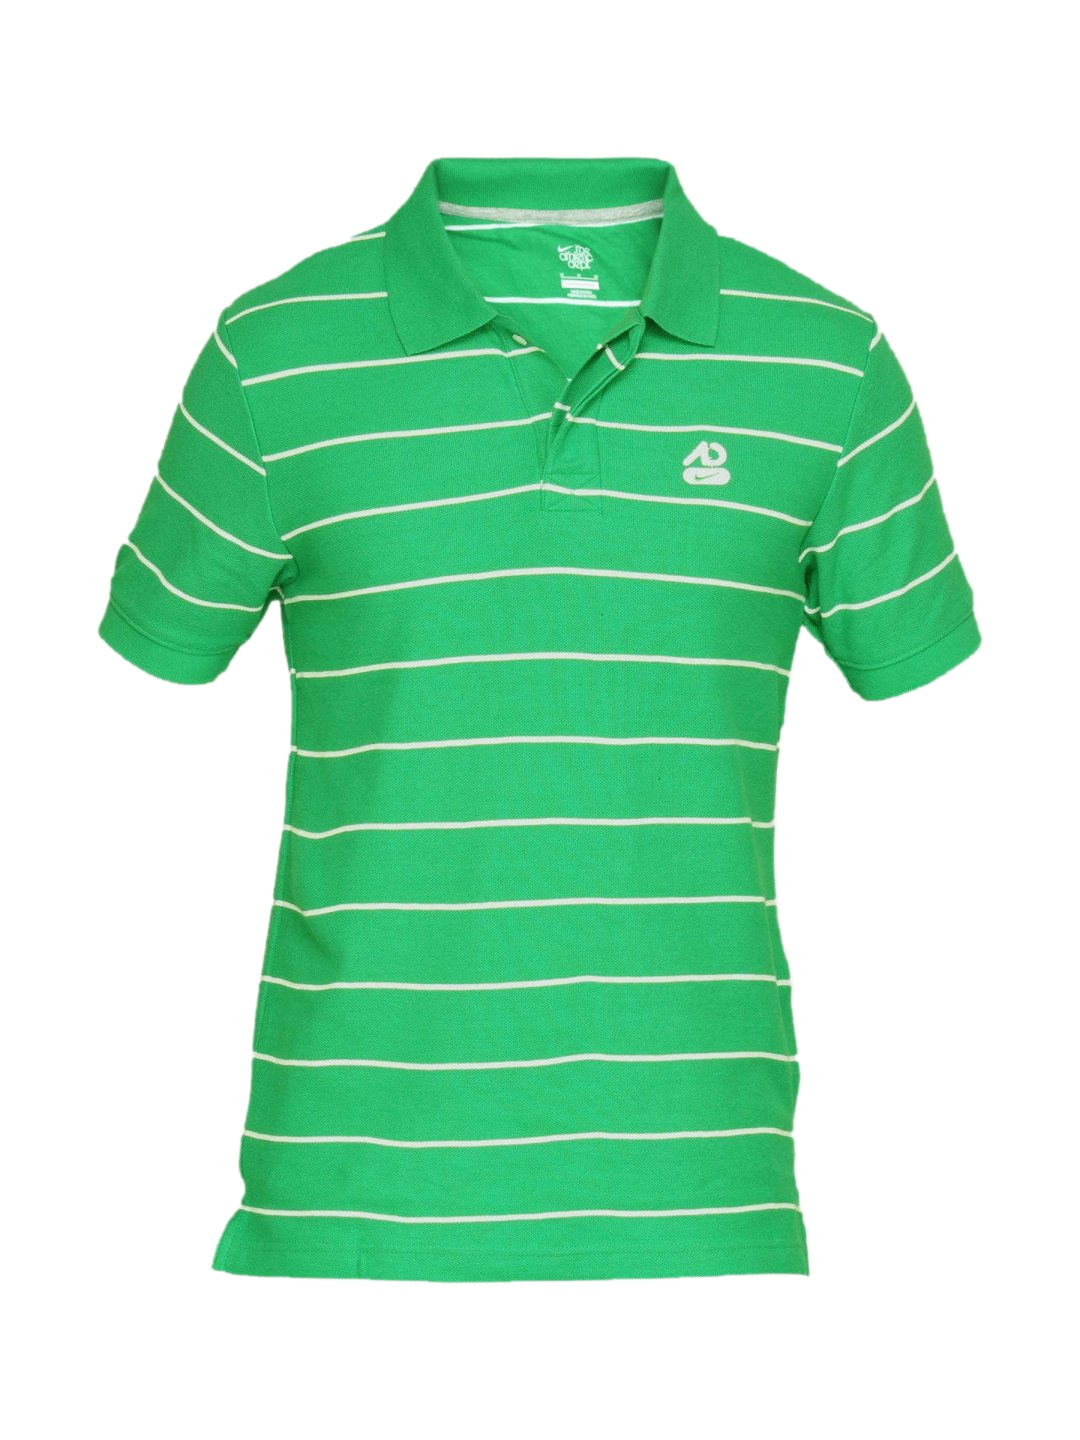 Nike Men's Club Pique Green T-shirt